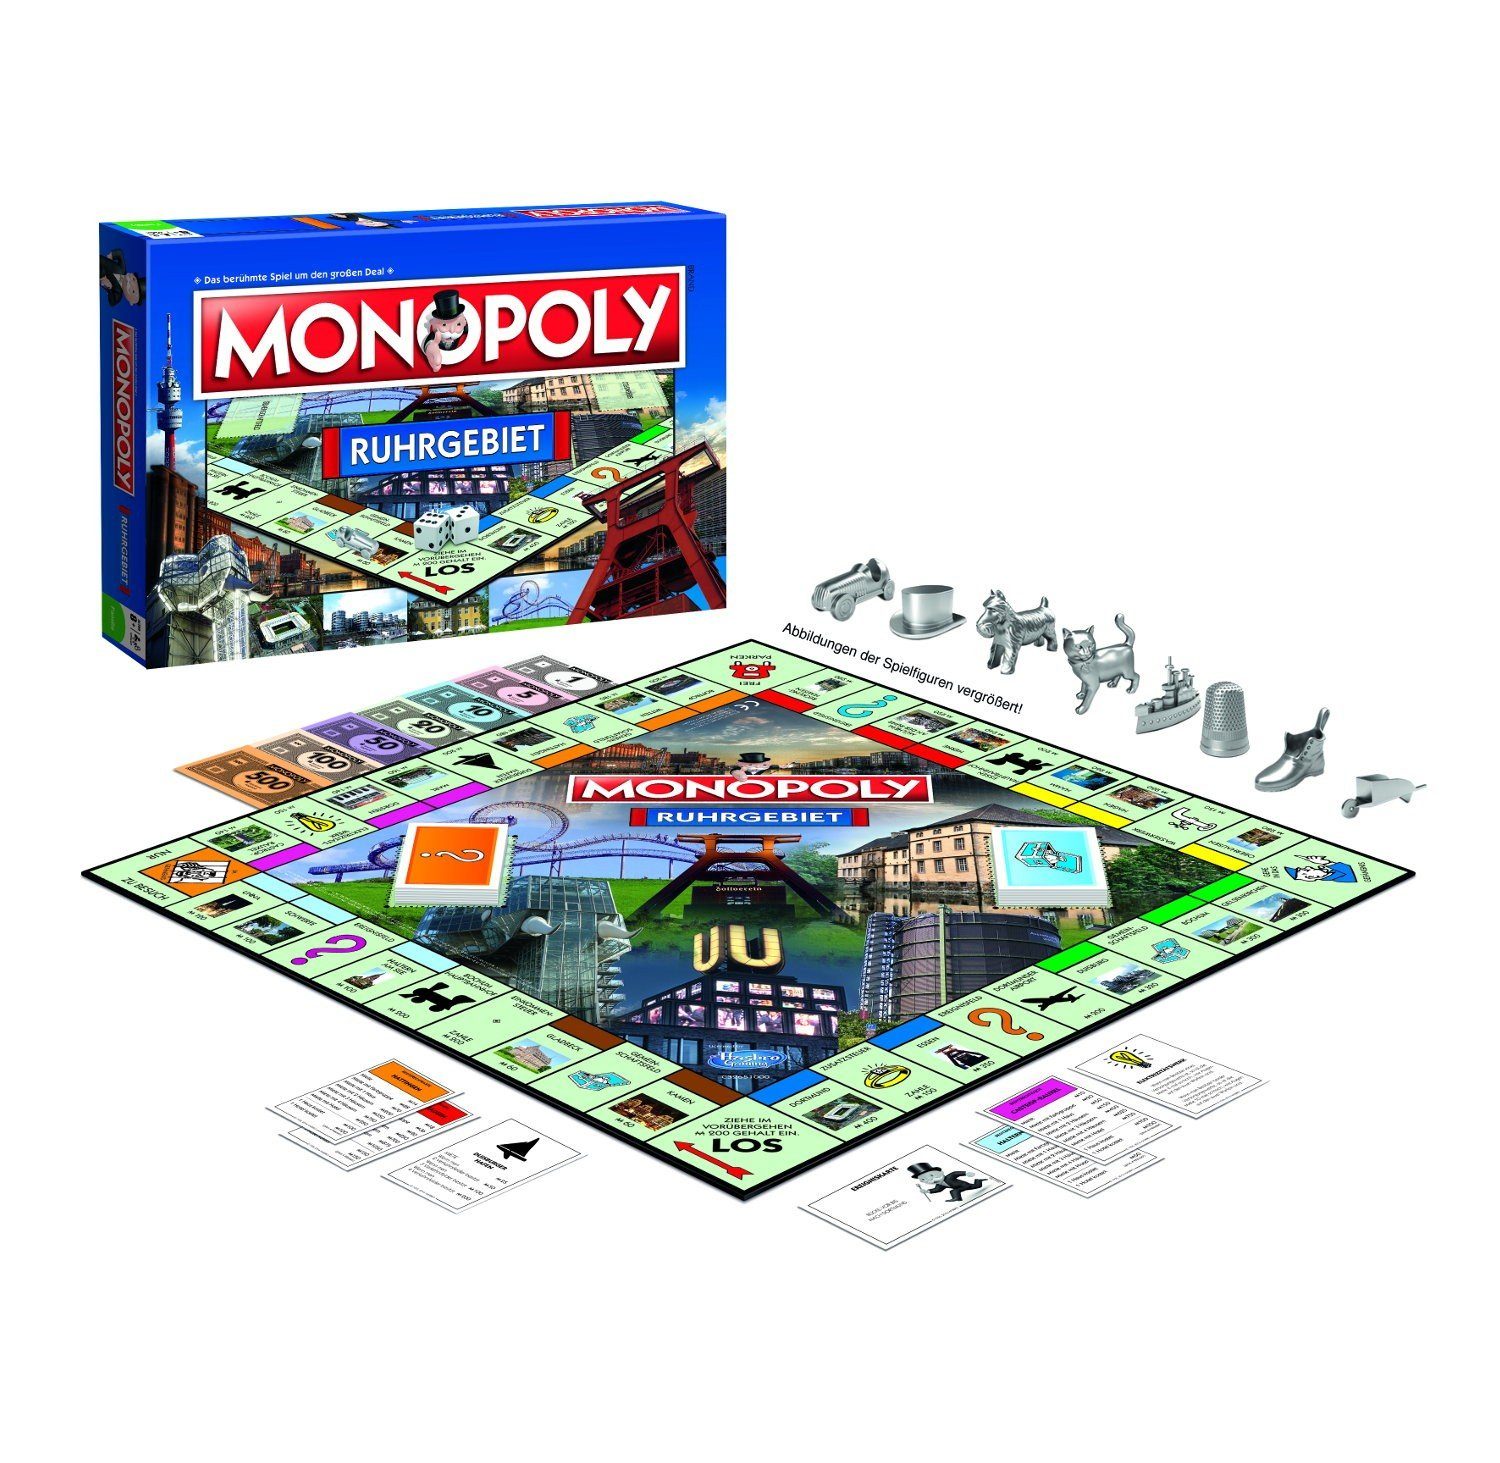 Winning Monopoly Moves Brettspiel Spiel, Ruhrgebiet